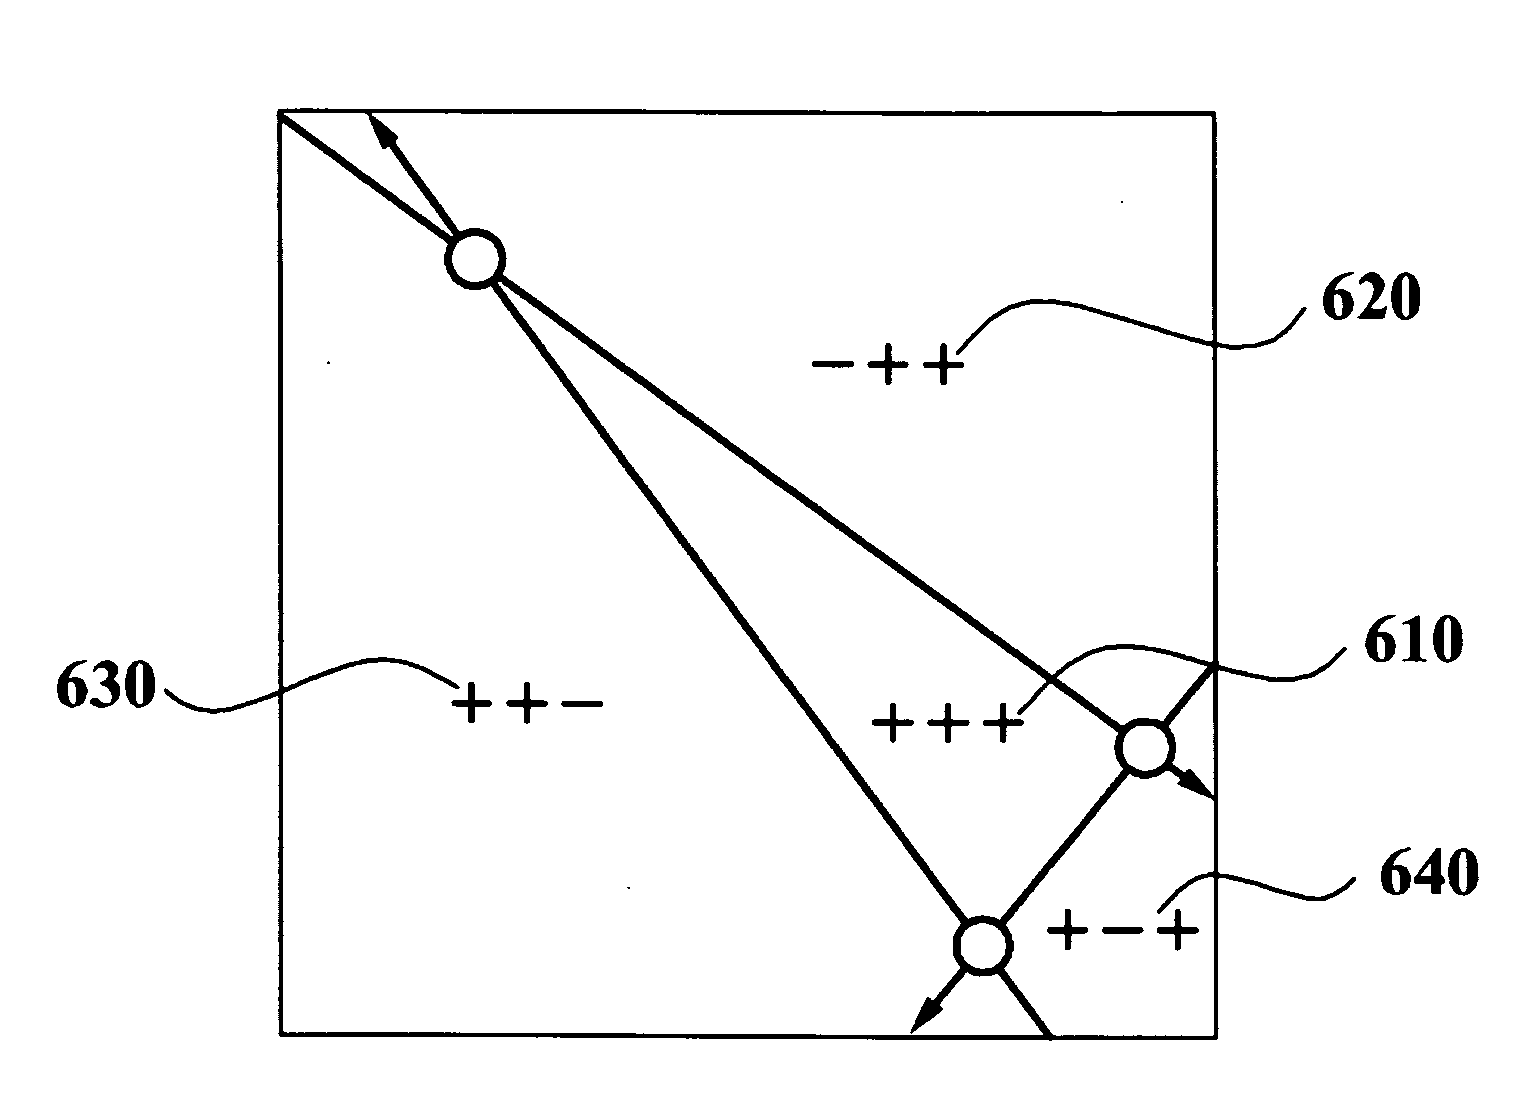 Method and system for tile binning using half-plane edge function